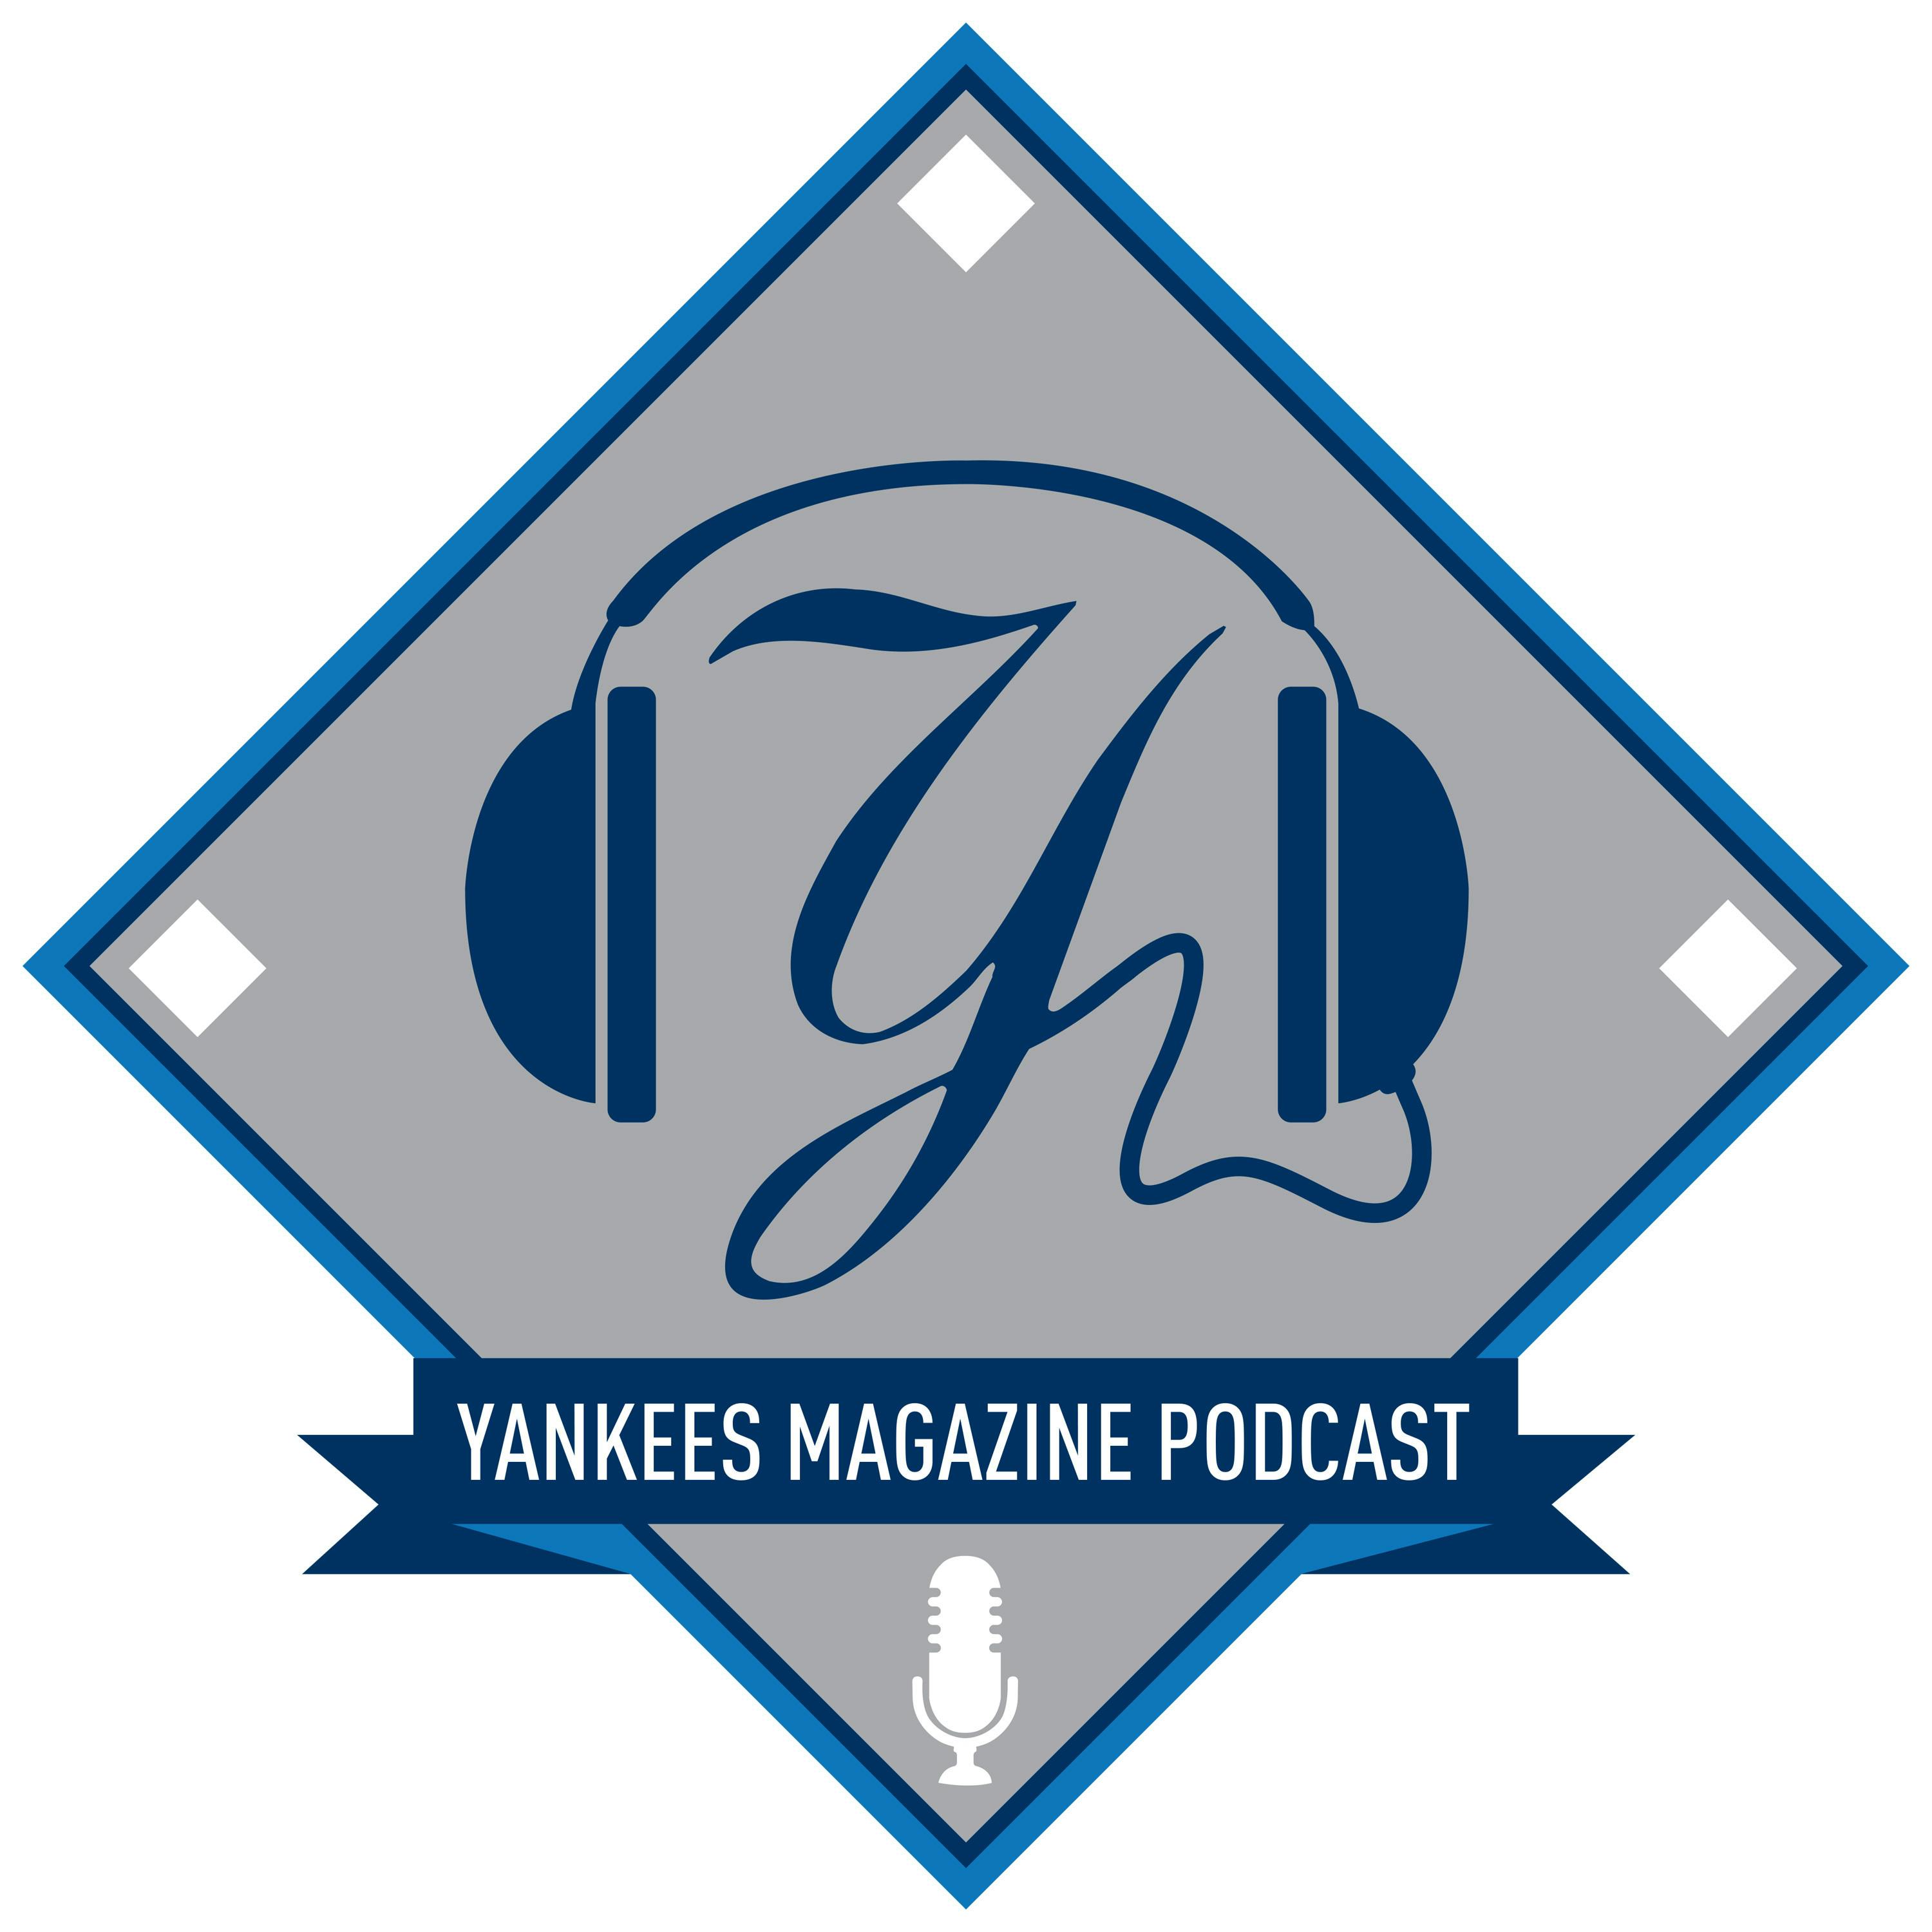 Yankees Magazine Podcast. Season 5, Episode 8: The Luckiest